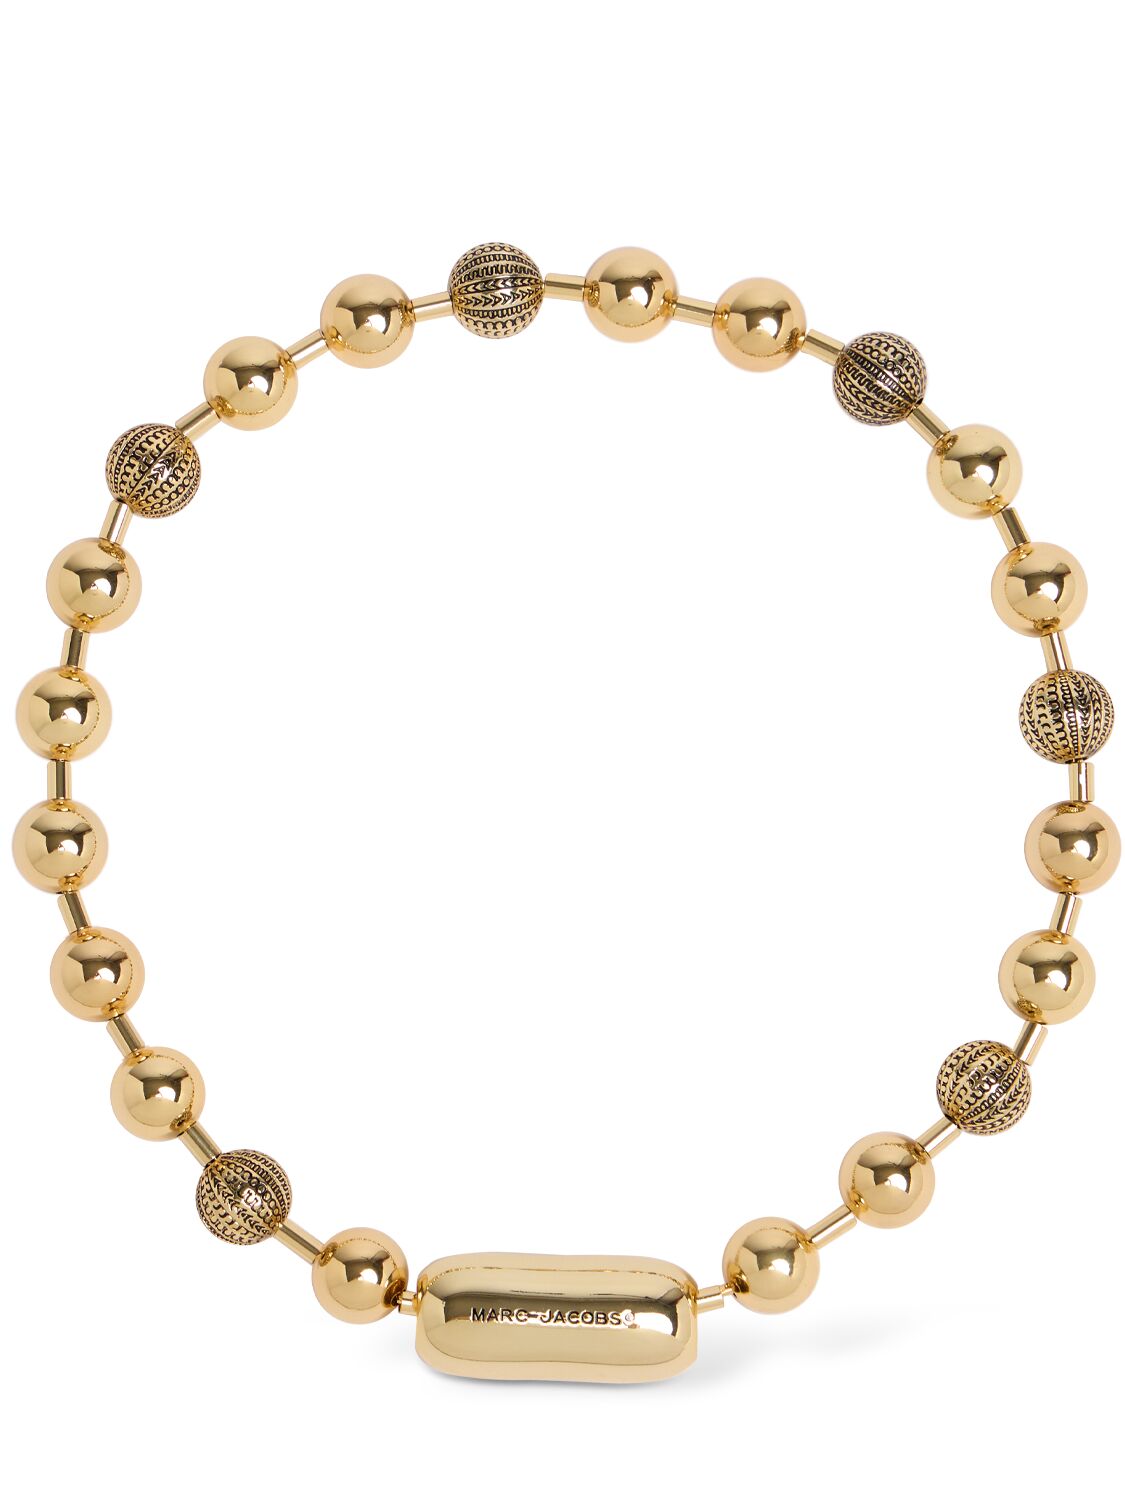 Monogram Ball Chain Collar Necklace